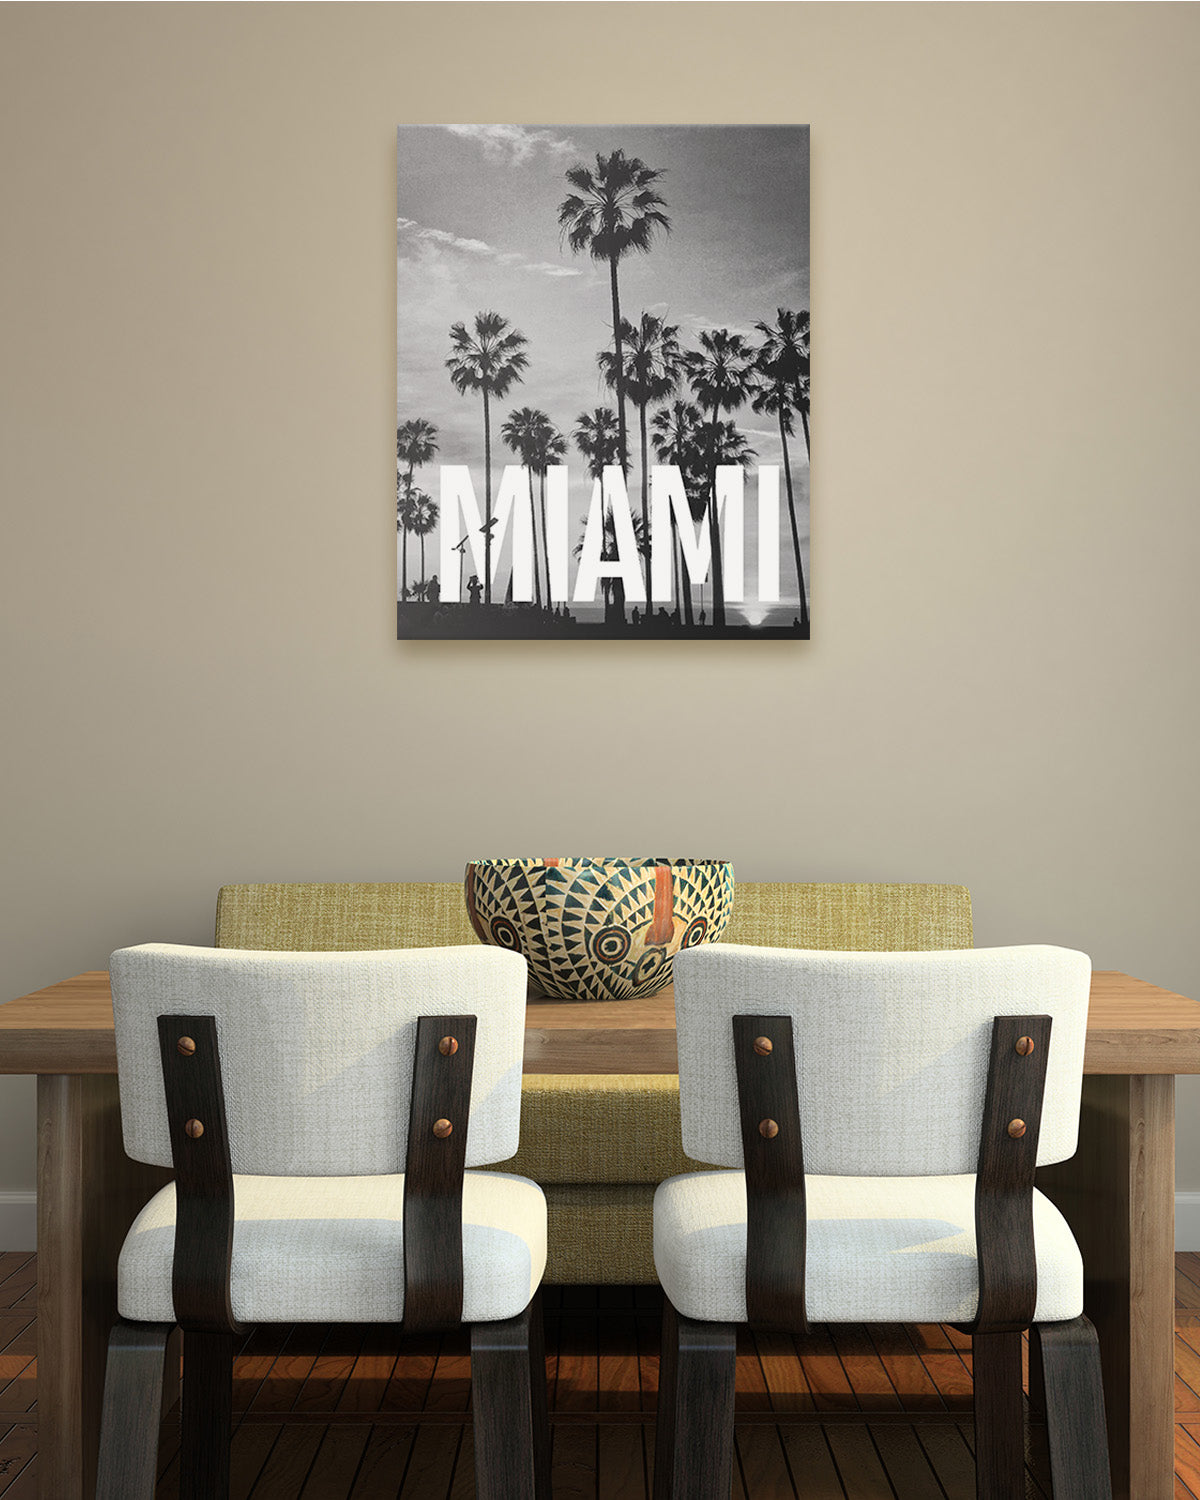 Miami Black and White Wall Art - FloridaRoom Decor - Travel Destination Home Decor - Great Souvenir for Bathroom Decor